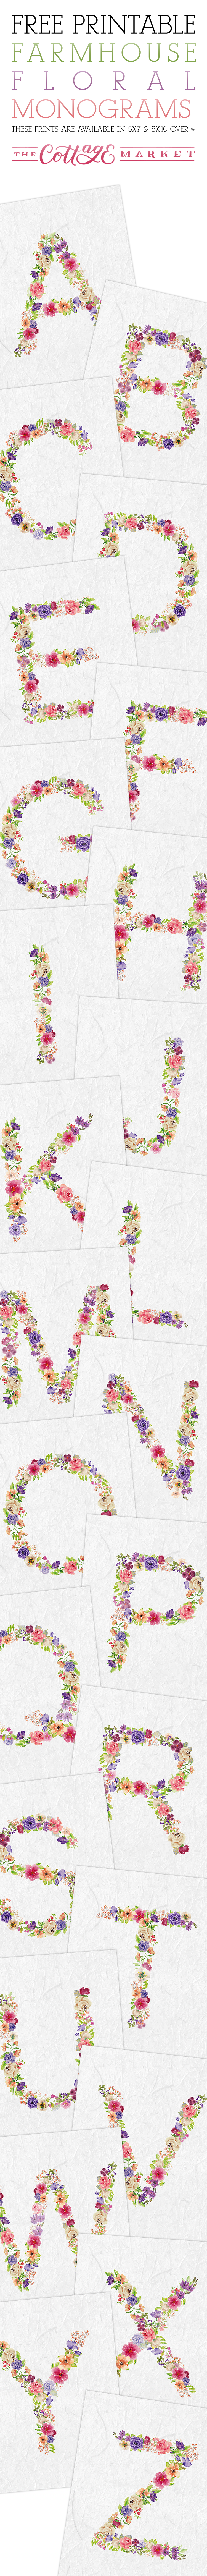 http://thecottagemarket.com/wp-content/uploads/2017/08/TCM-Floral-Monogram-TOWER-1.jpg